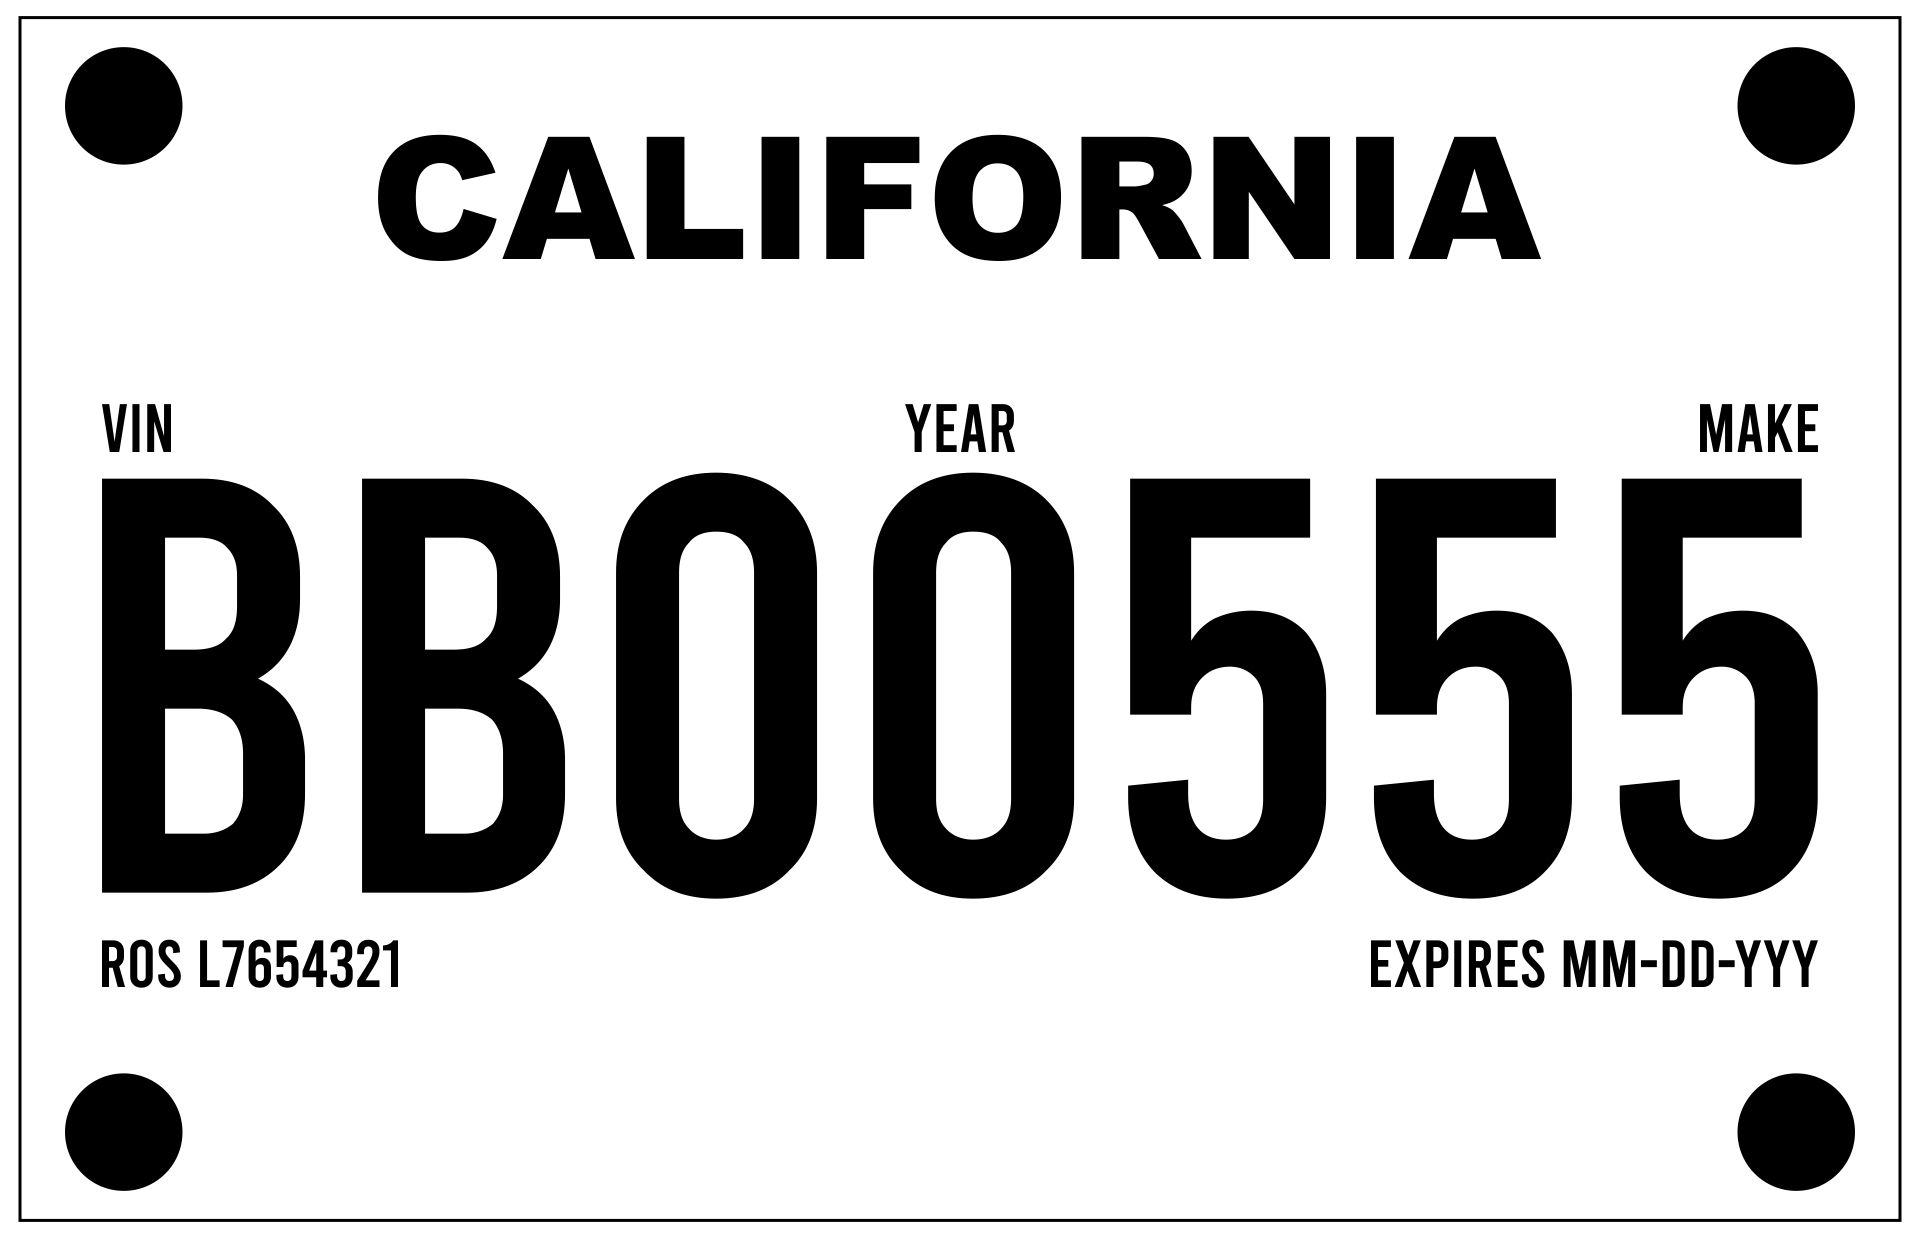 Printable California License Plate Template_22364